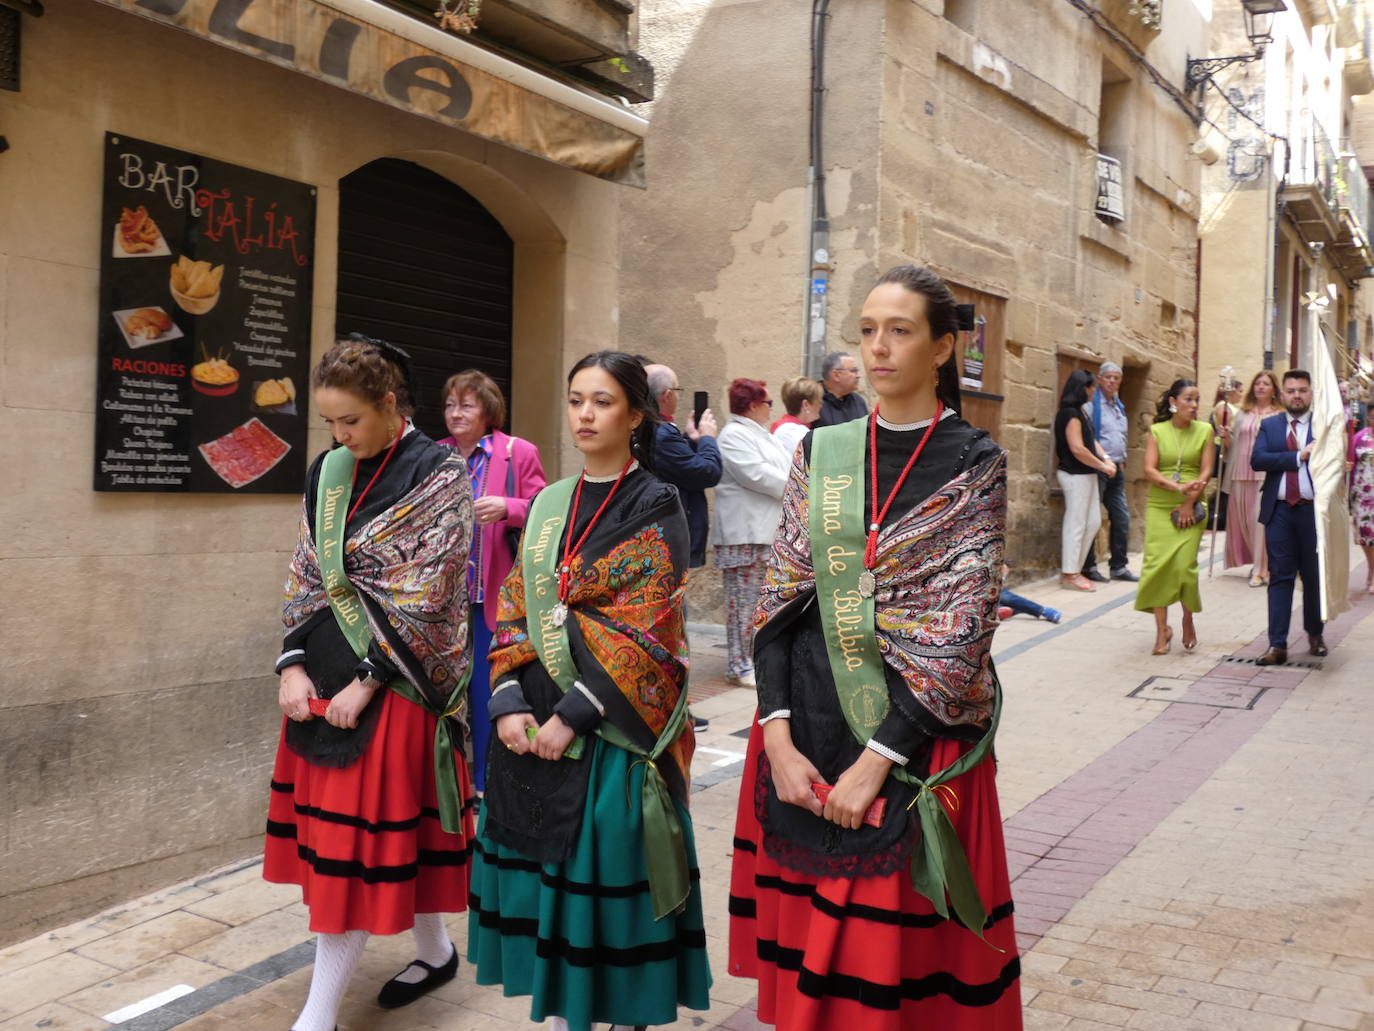 Fotos: San Felices vuelve a procesionar en Haro